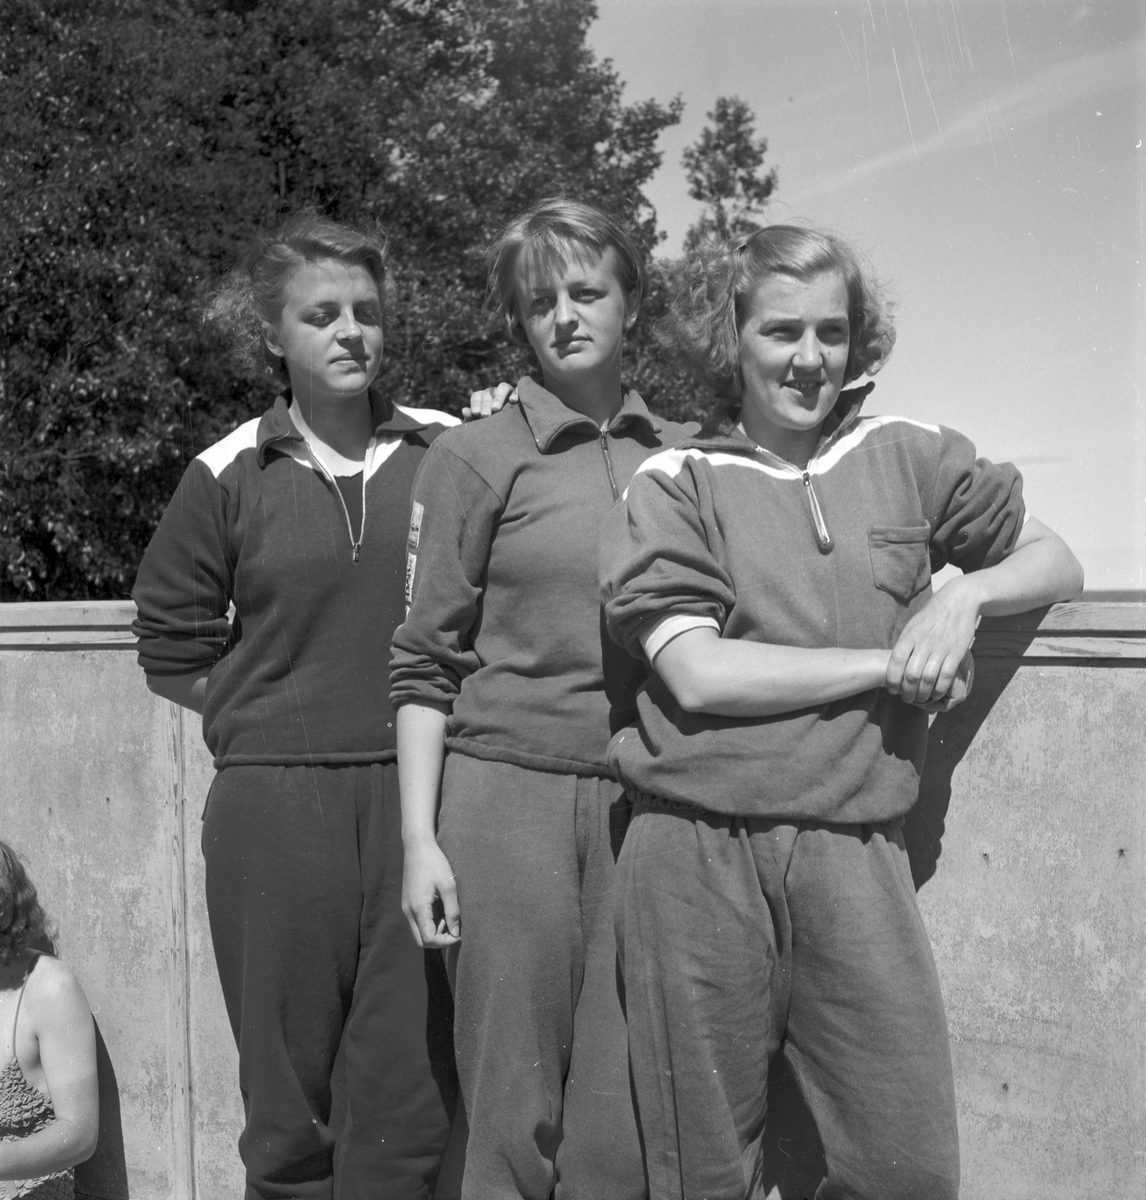 Simningens dag firas i Furuvik. 6 juli 1952.           Beställn. Margit Öberg, Väpnargatan 8 A, Gävle
